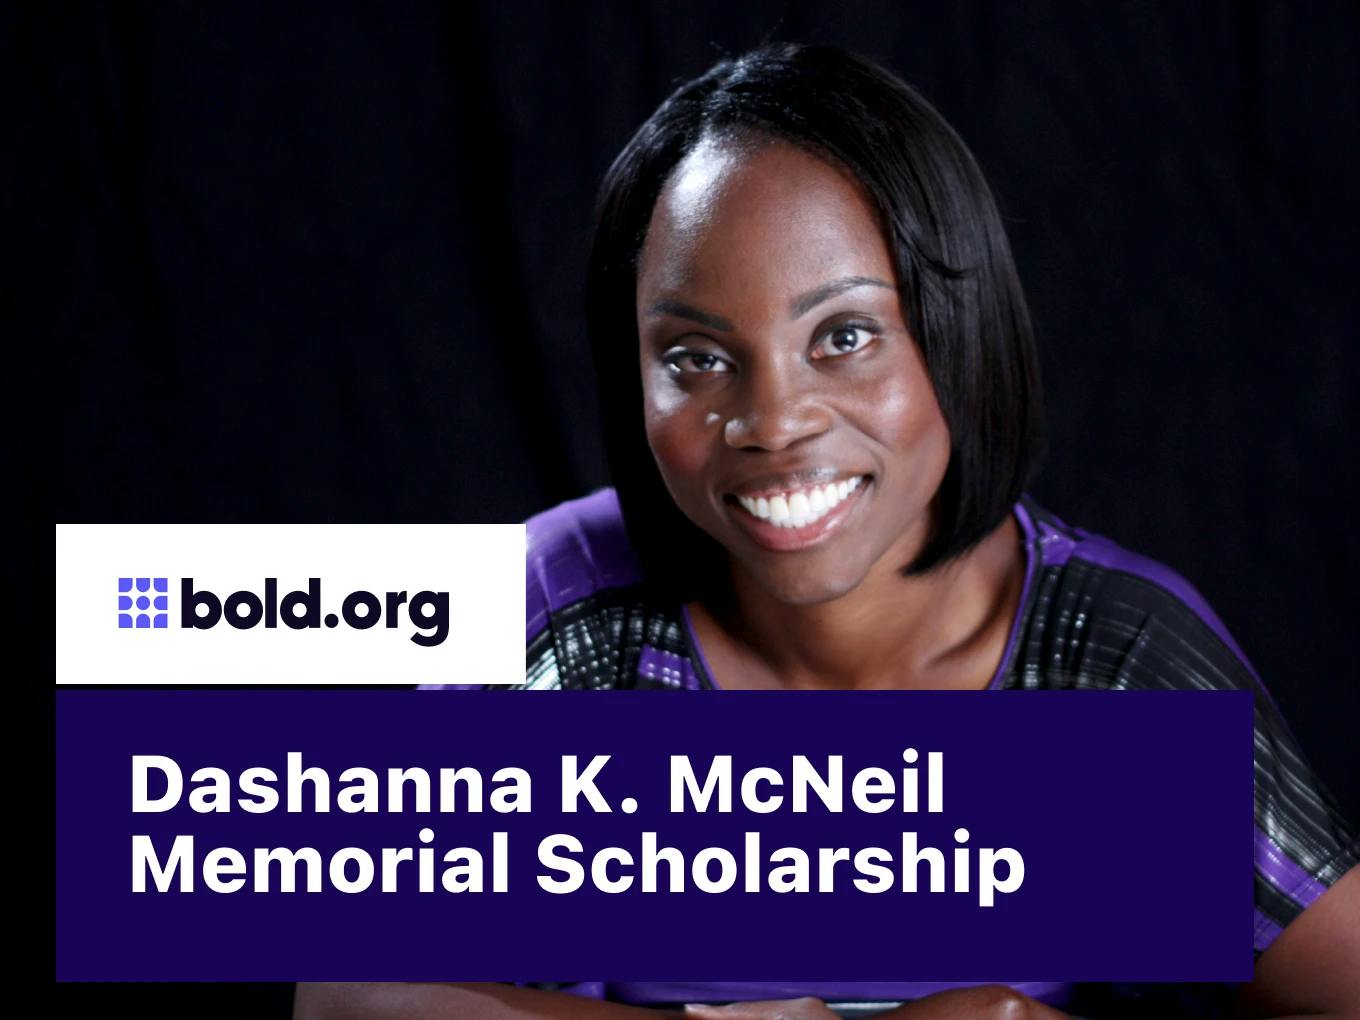 Dashanna K. McNeil Memorial Scholarship